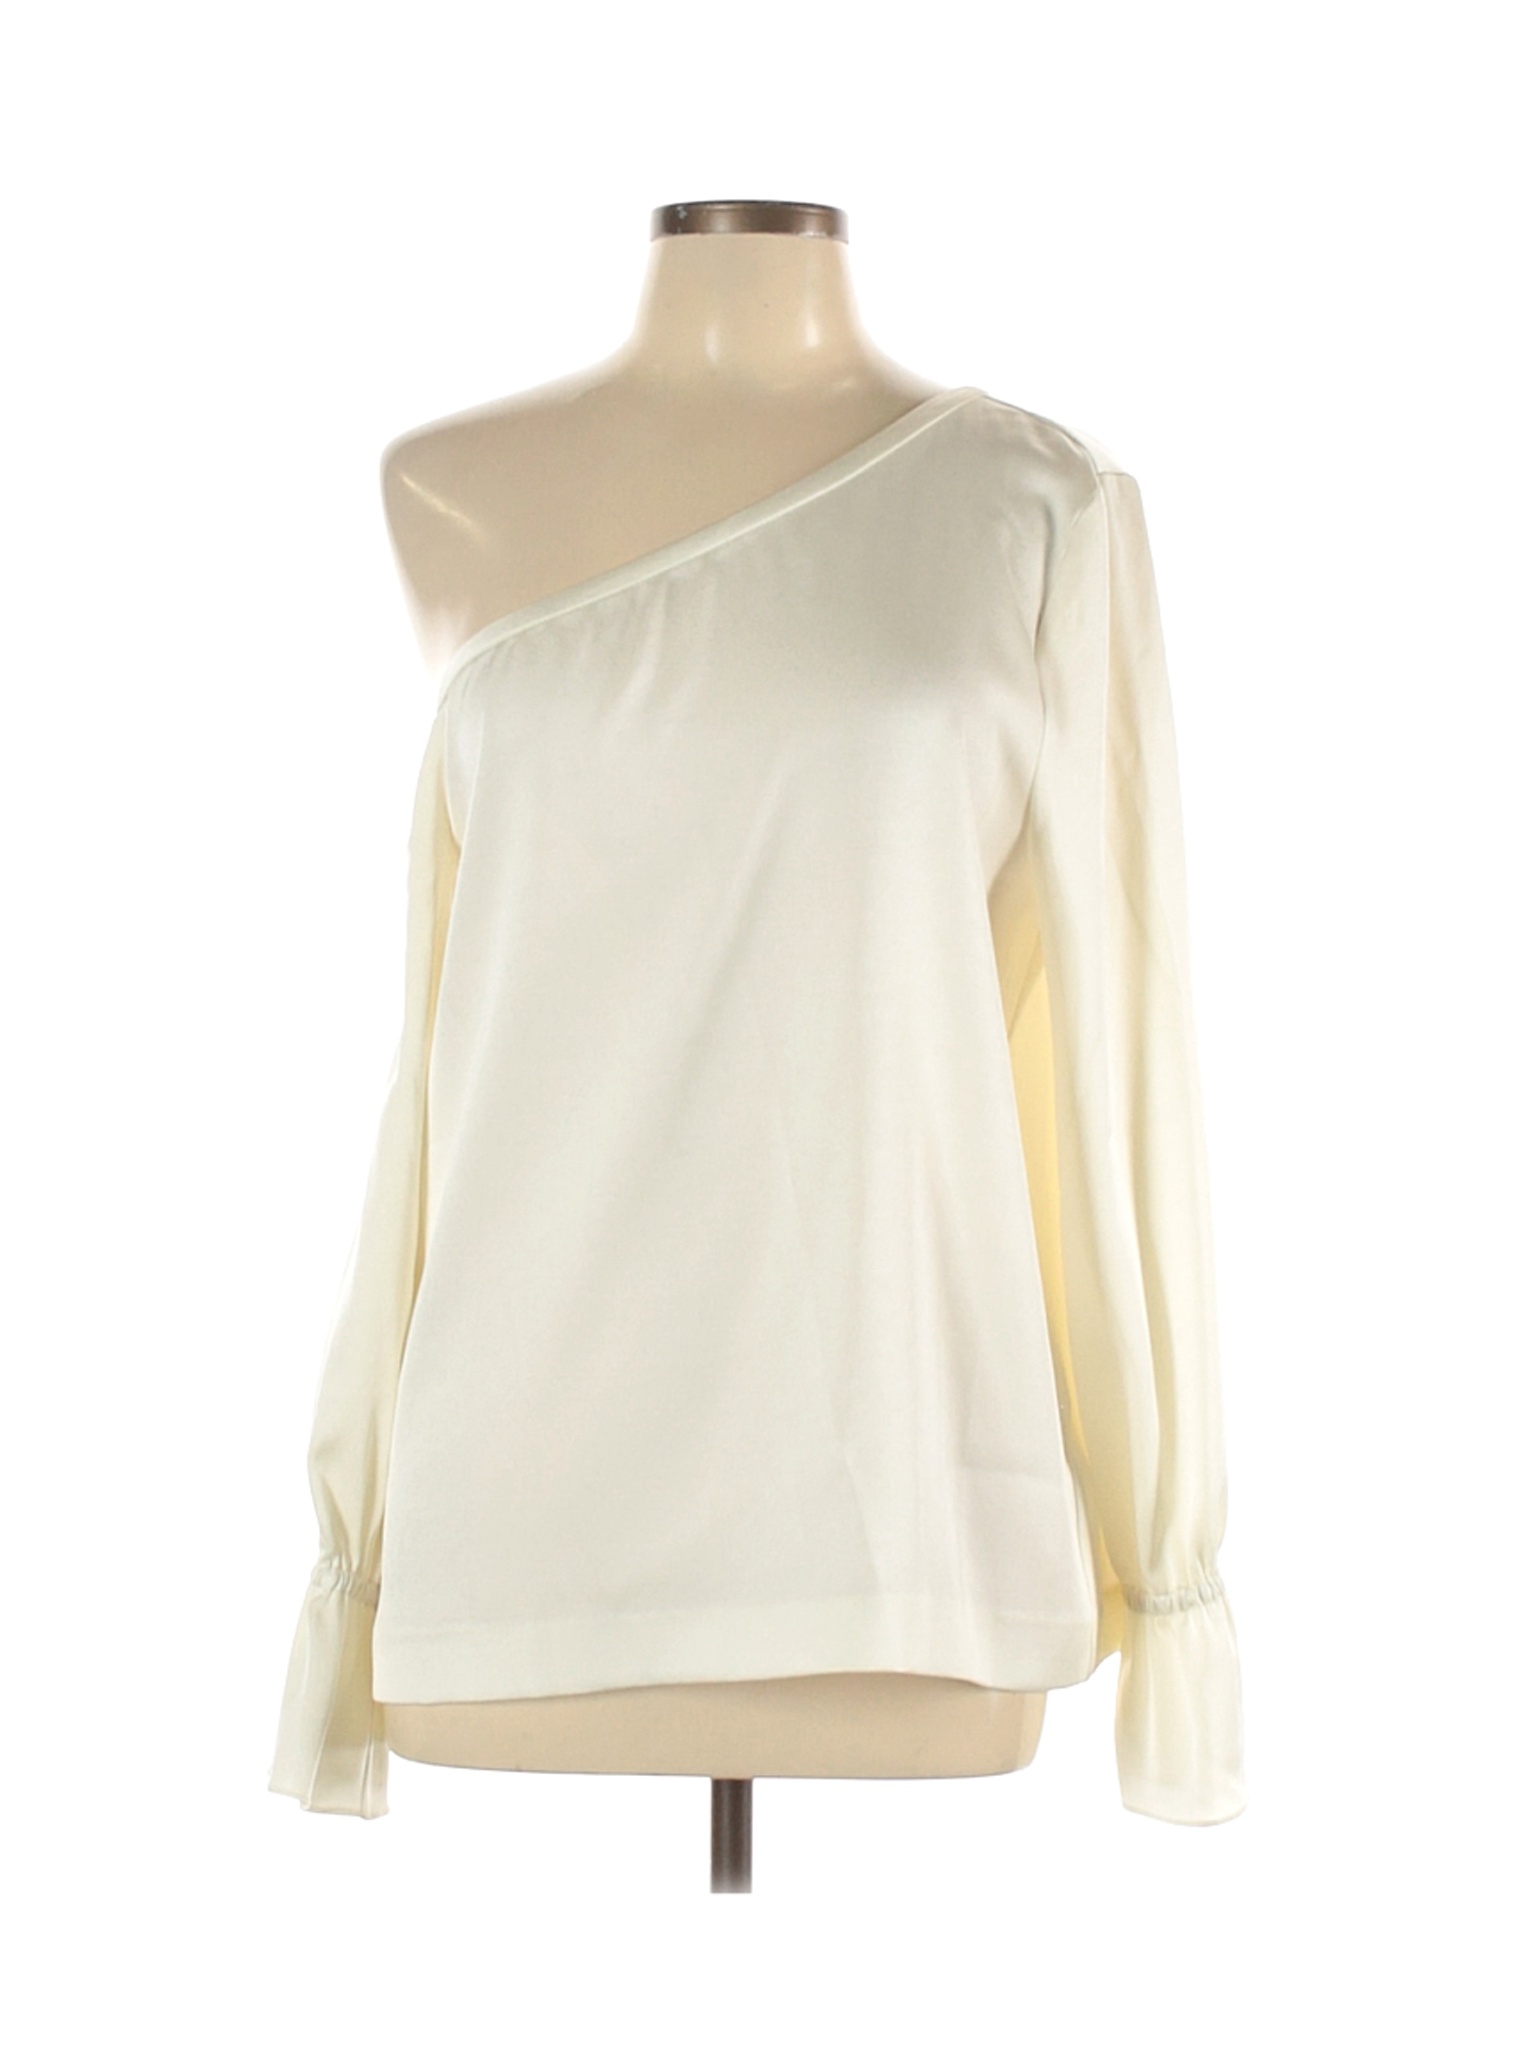 NWT Ramy Brook Women Ivory Long Sleeve Blouse L | eBay